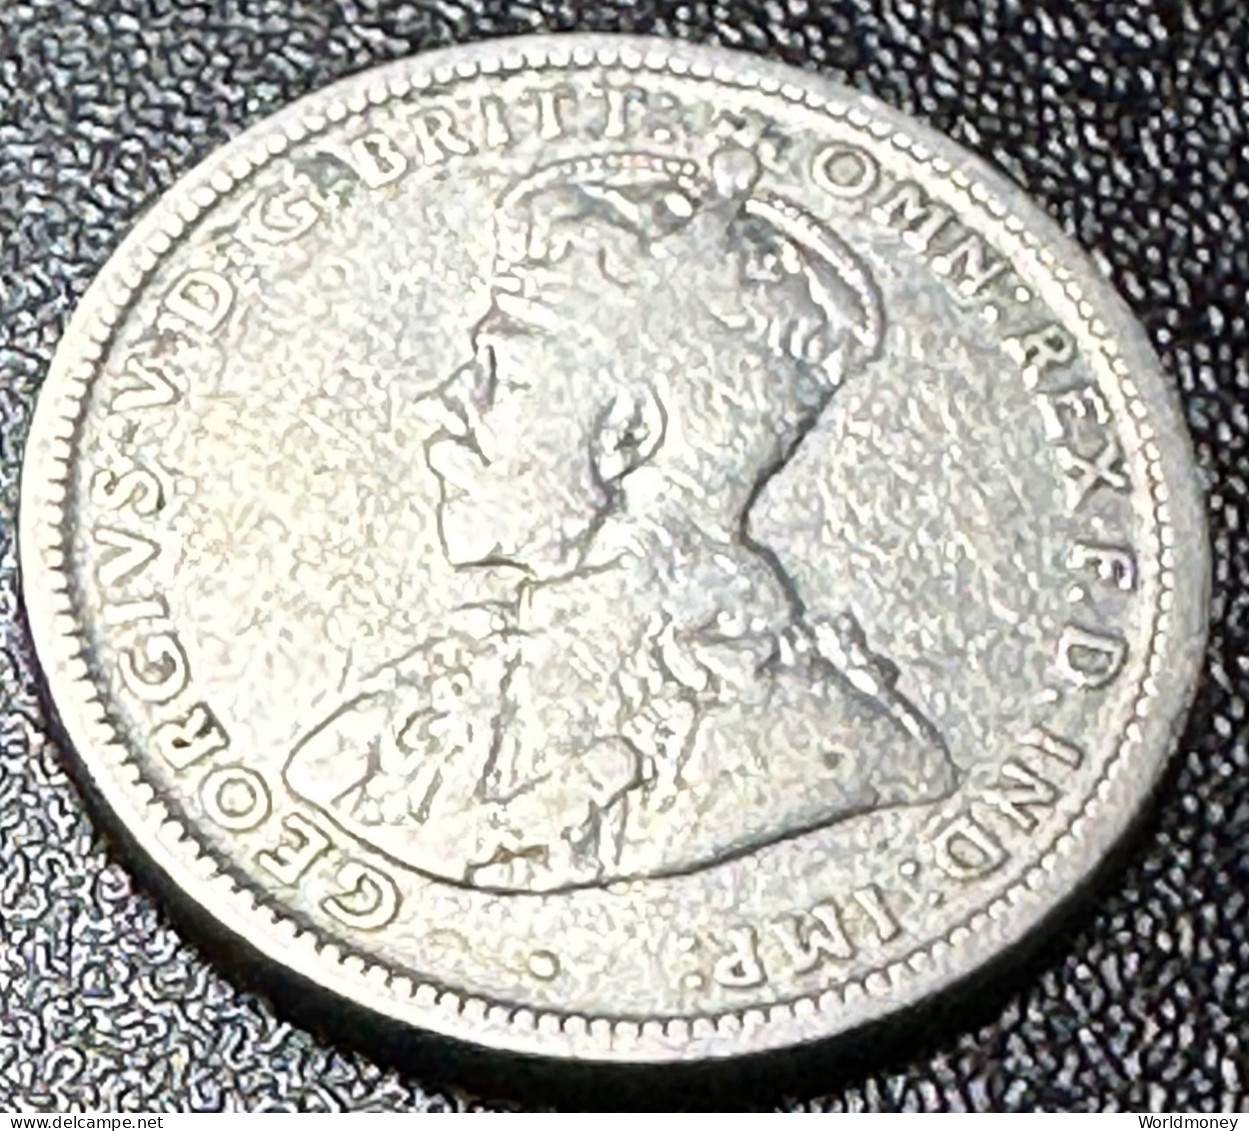 Australia 1 Shilling 1918 (Silver) - Shilling